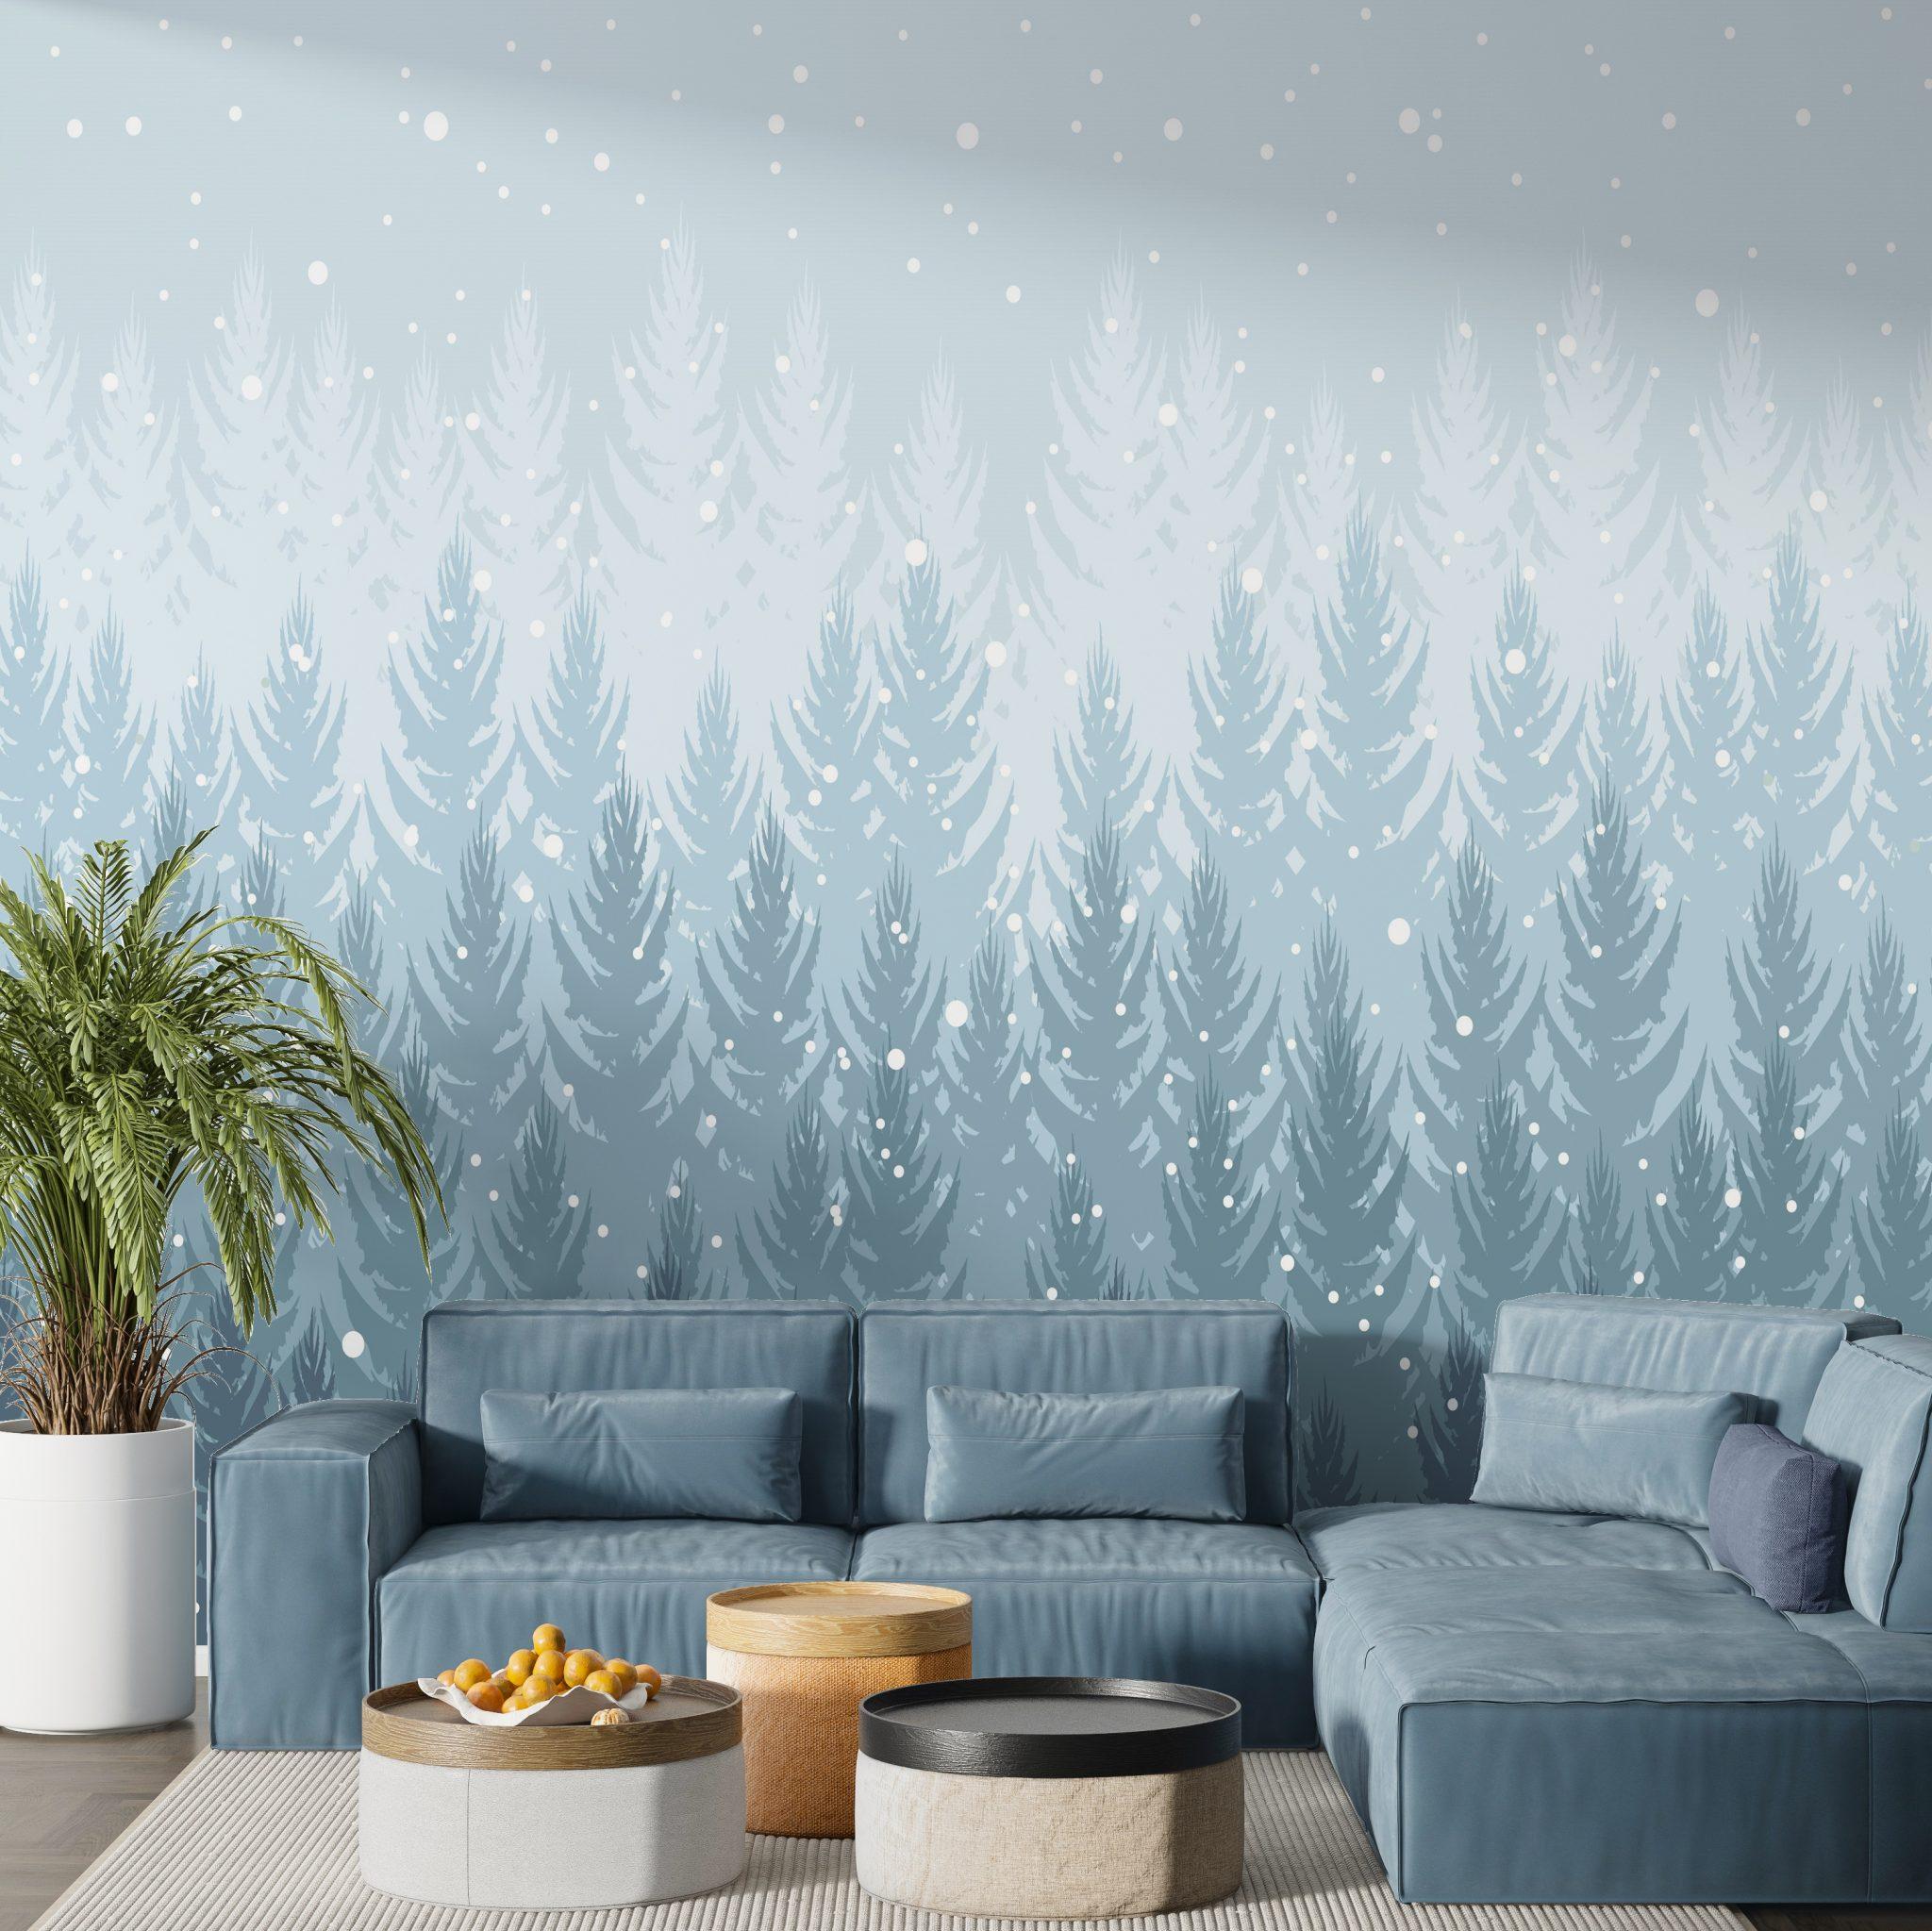 Snow Wallpaper Murals For A Cozy Winter Look